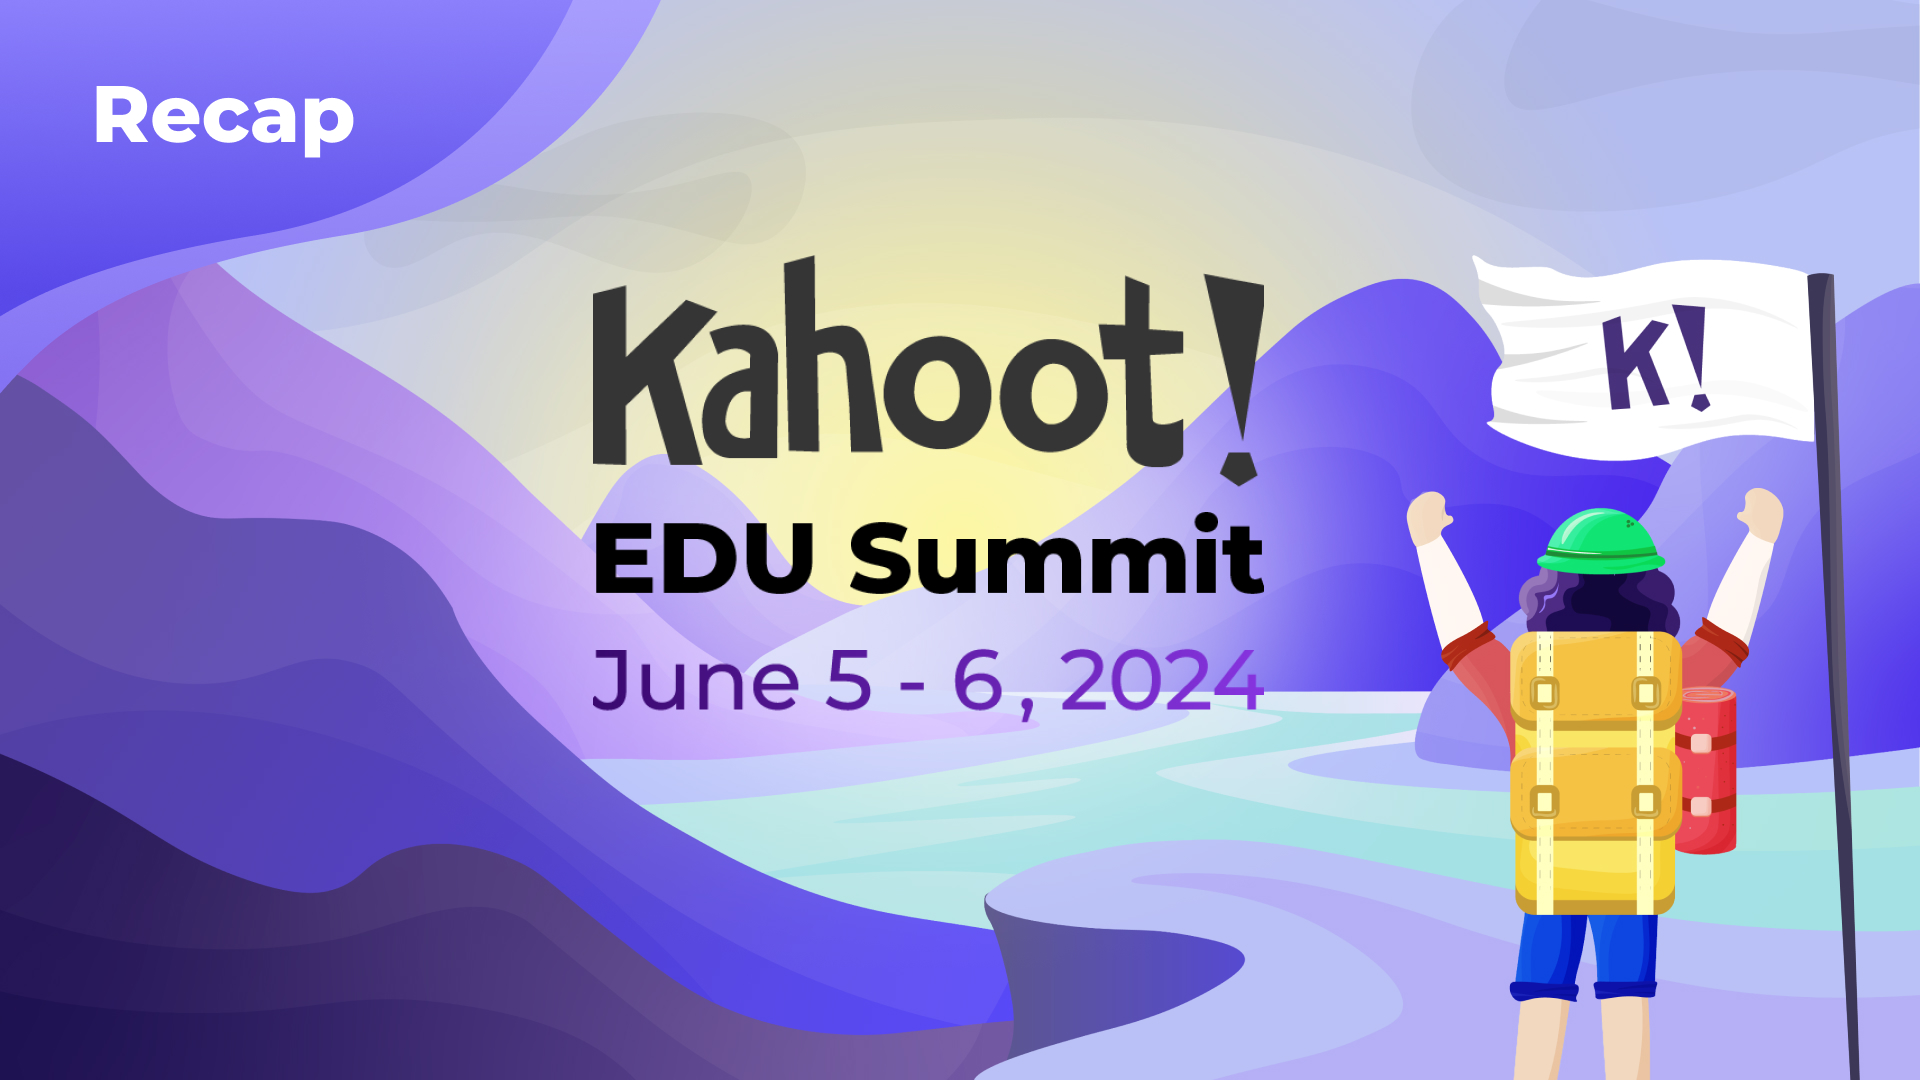 Recap "Kahoot! EDU Summit" June 5-6, 2024 with logo